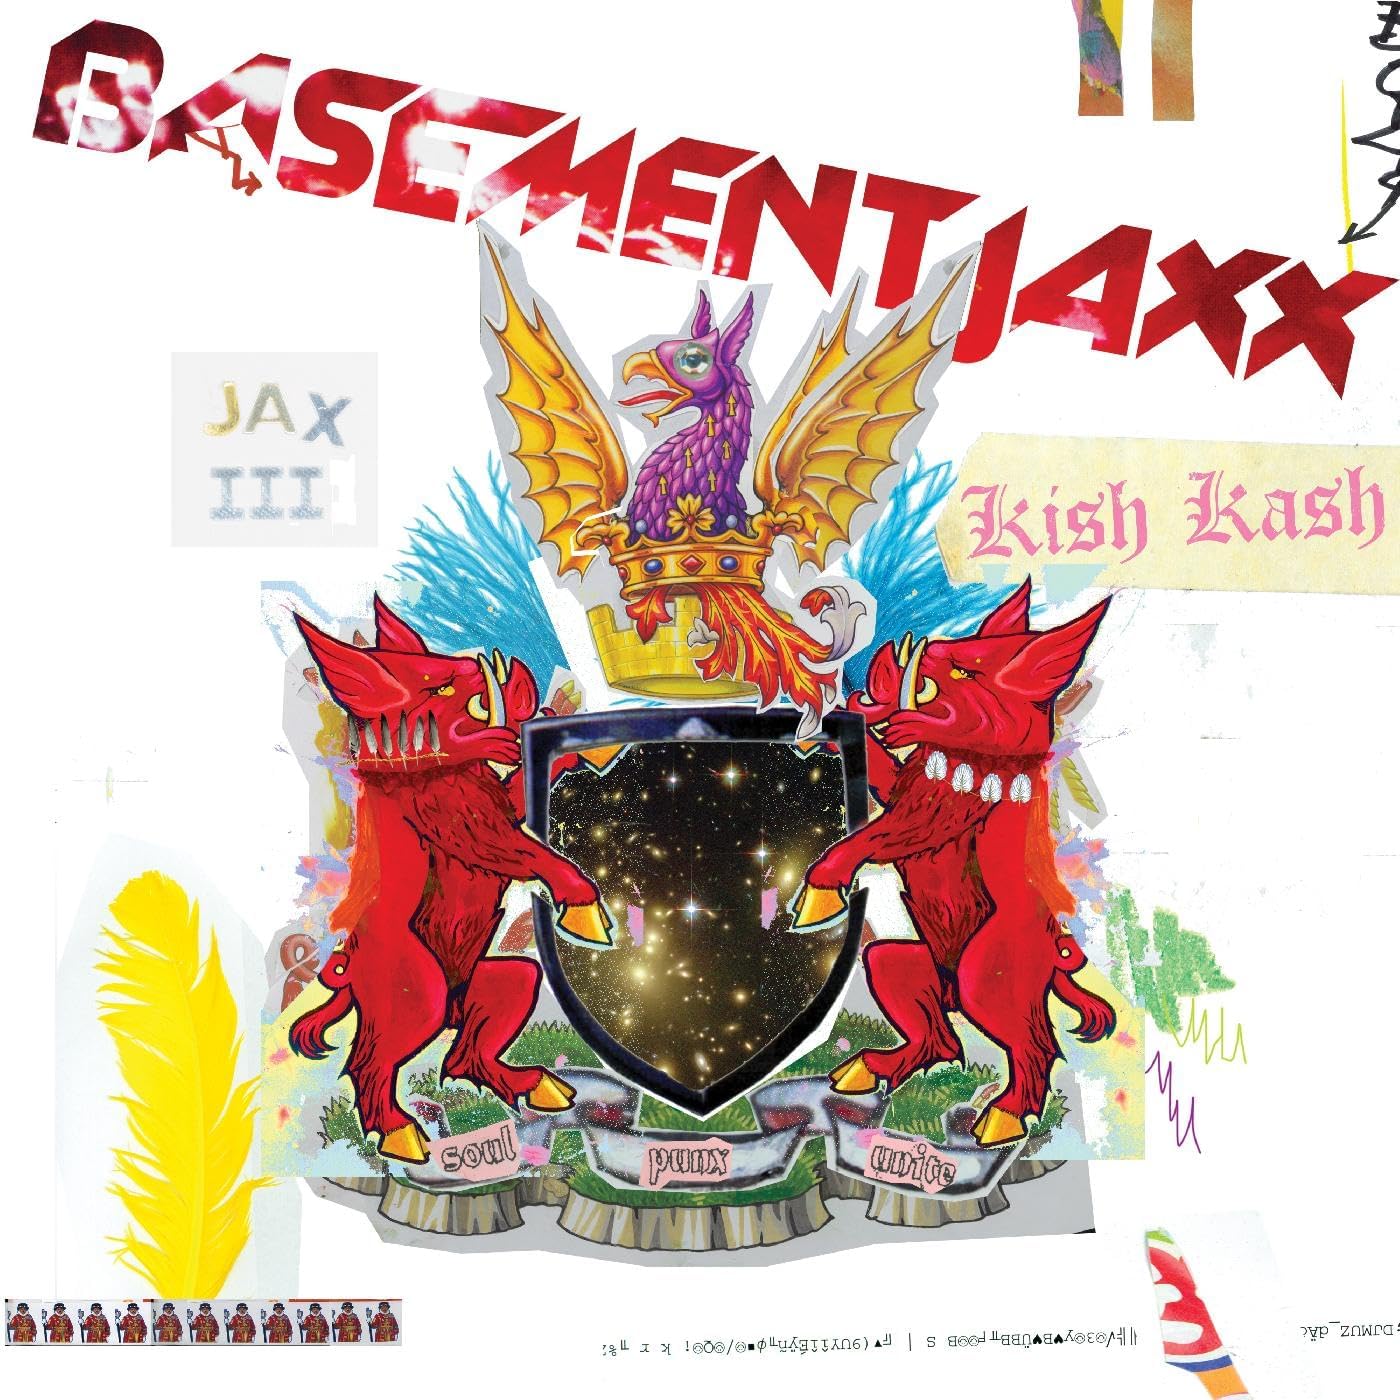 Basement Jaxx Kish Kash - Ireland Vinyl